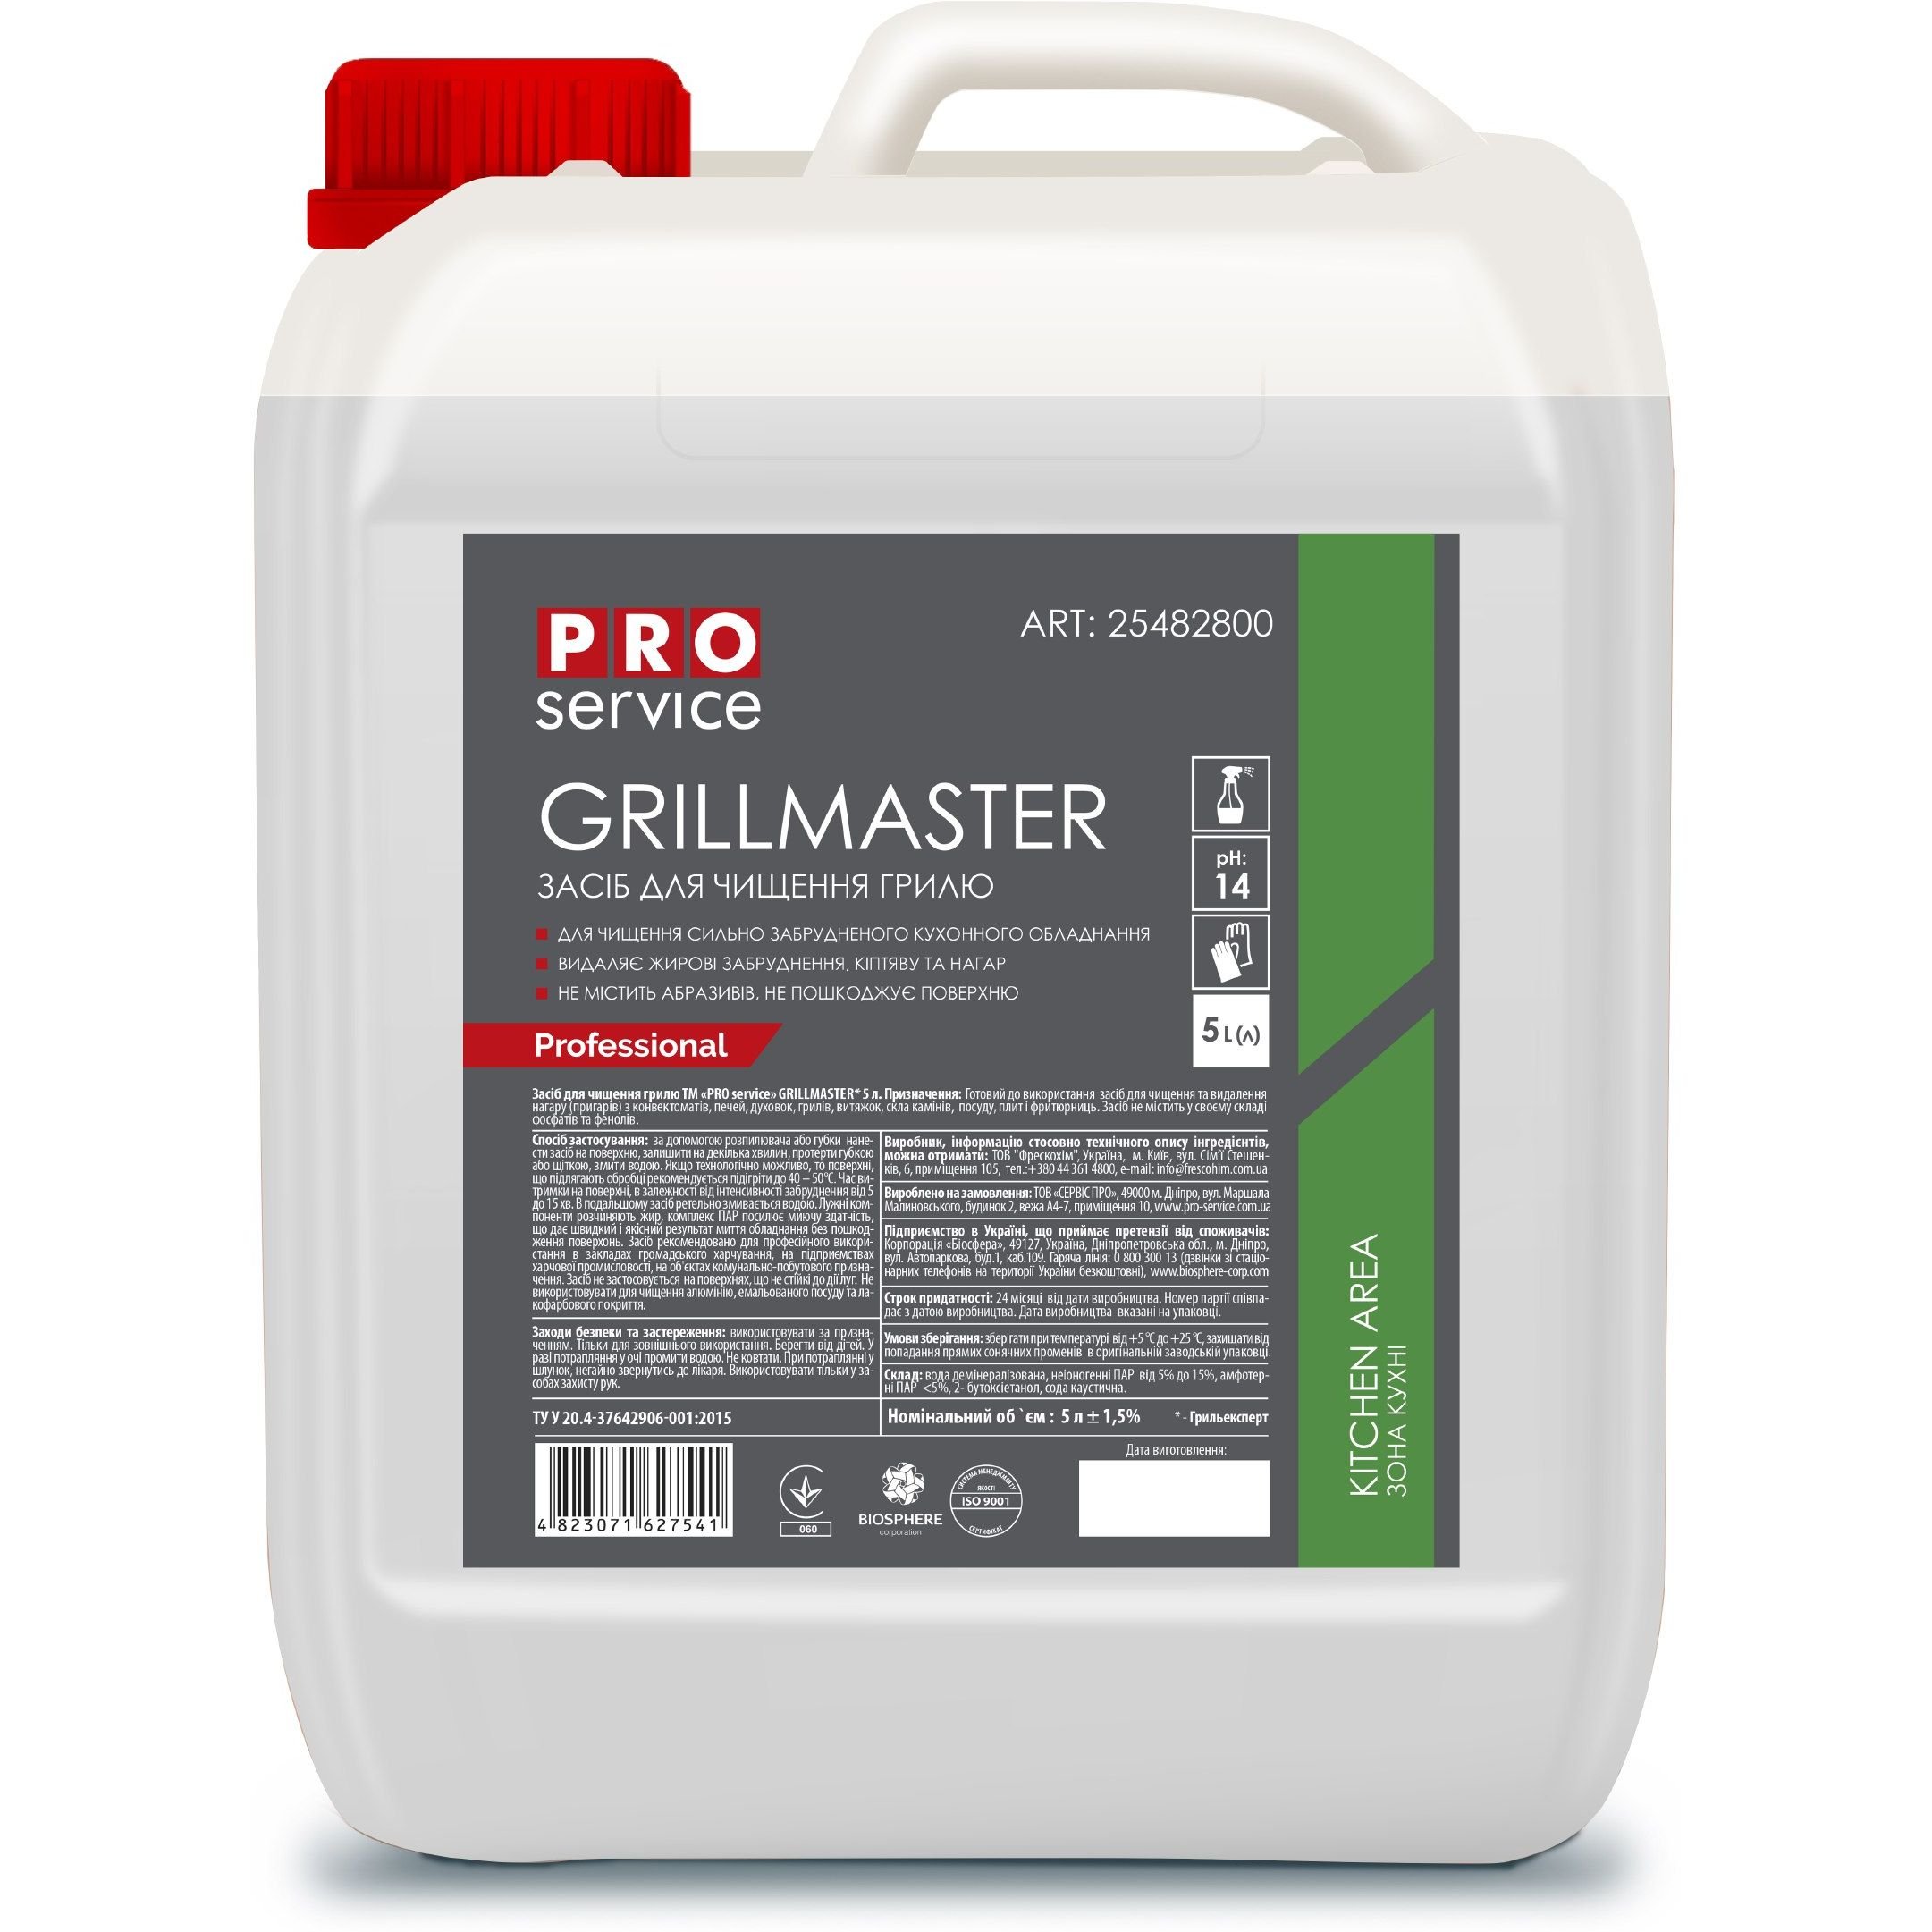 Средство для чистки гриля PRO service Grillmaster, щелочной, 5 л (25482800) - фото 1